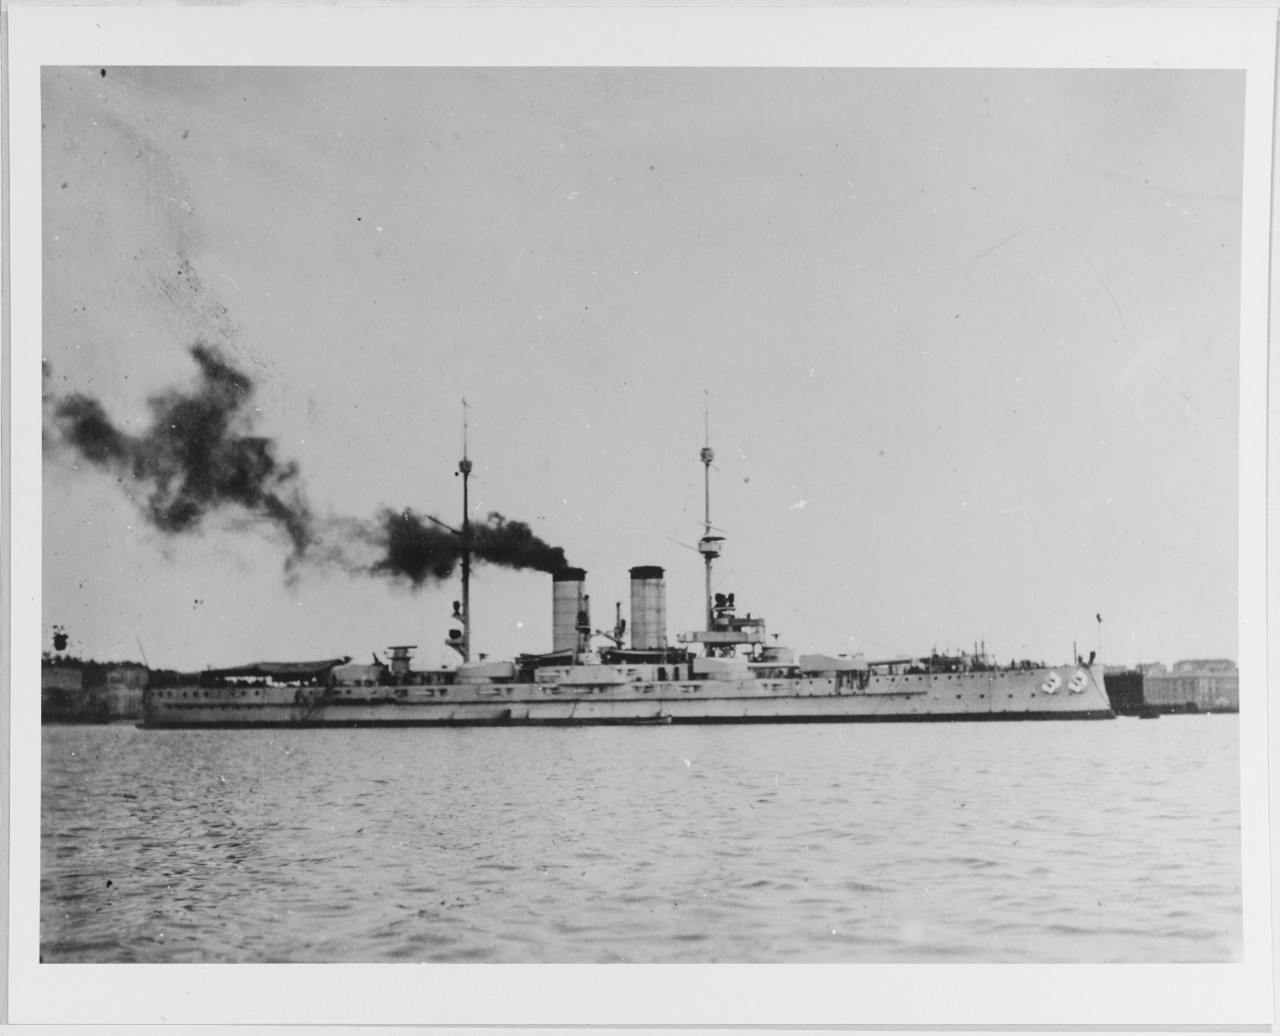 The Ex-Austrian Battleship RADETZKY in 1919.